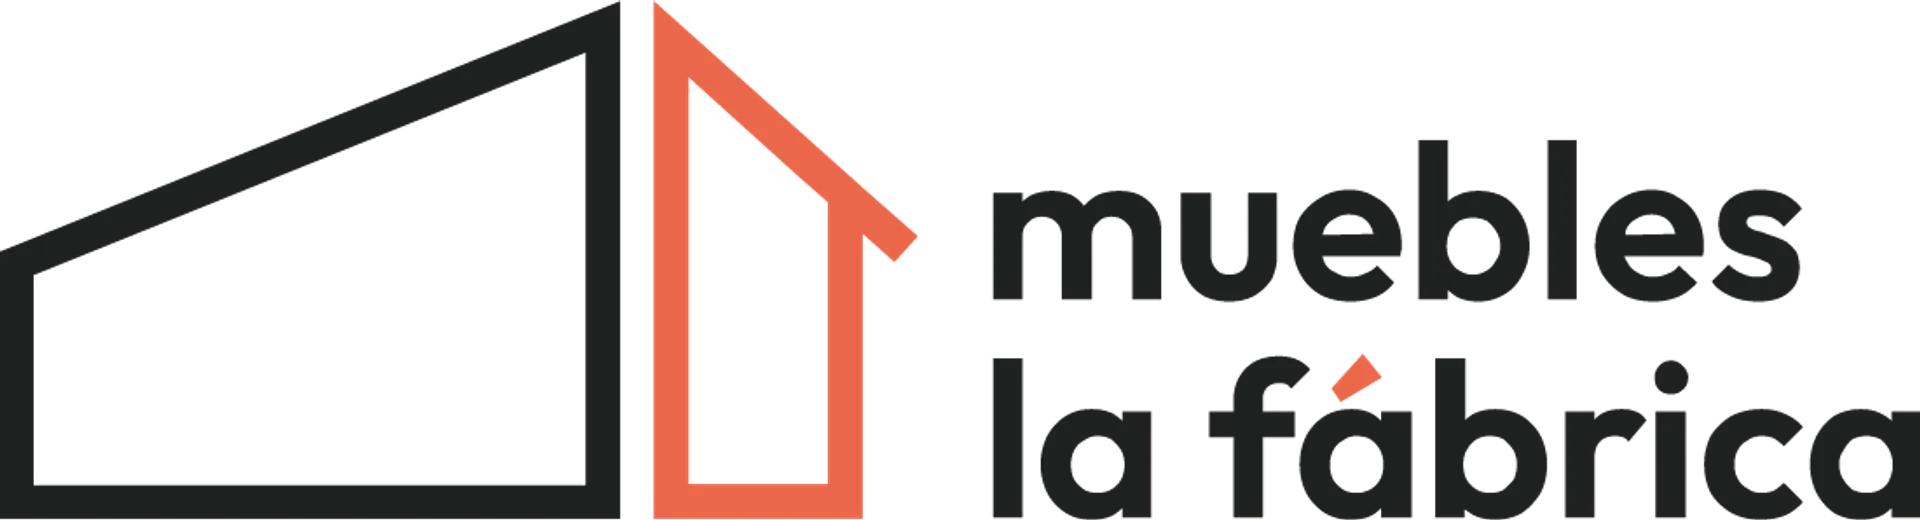 MUEBLES LA FÁBRICA logo